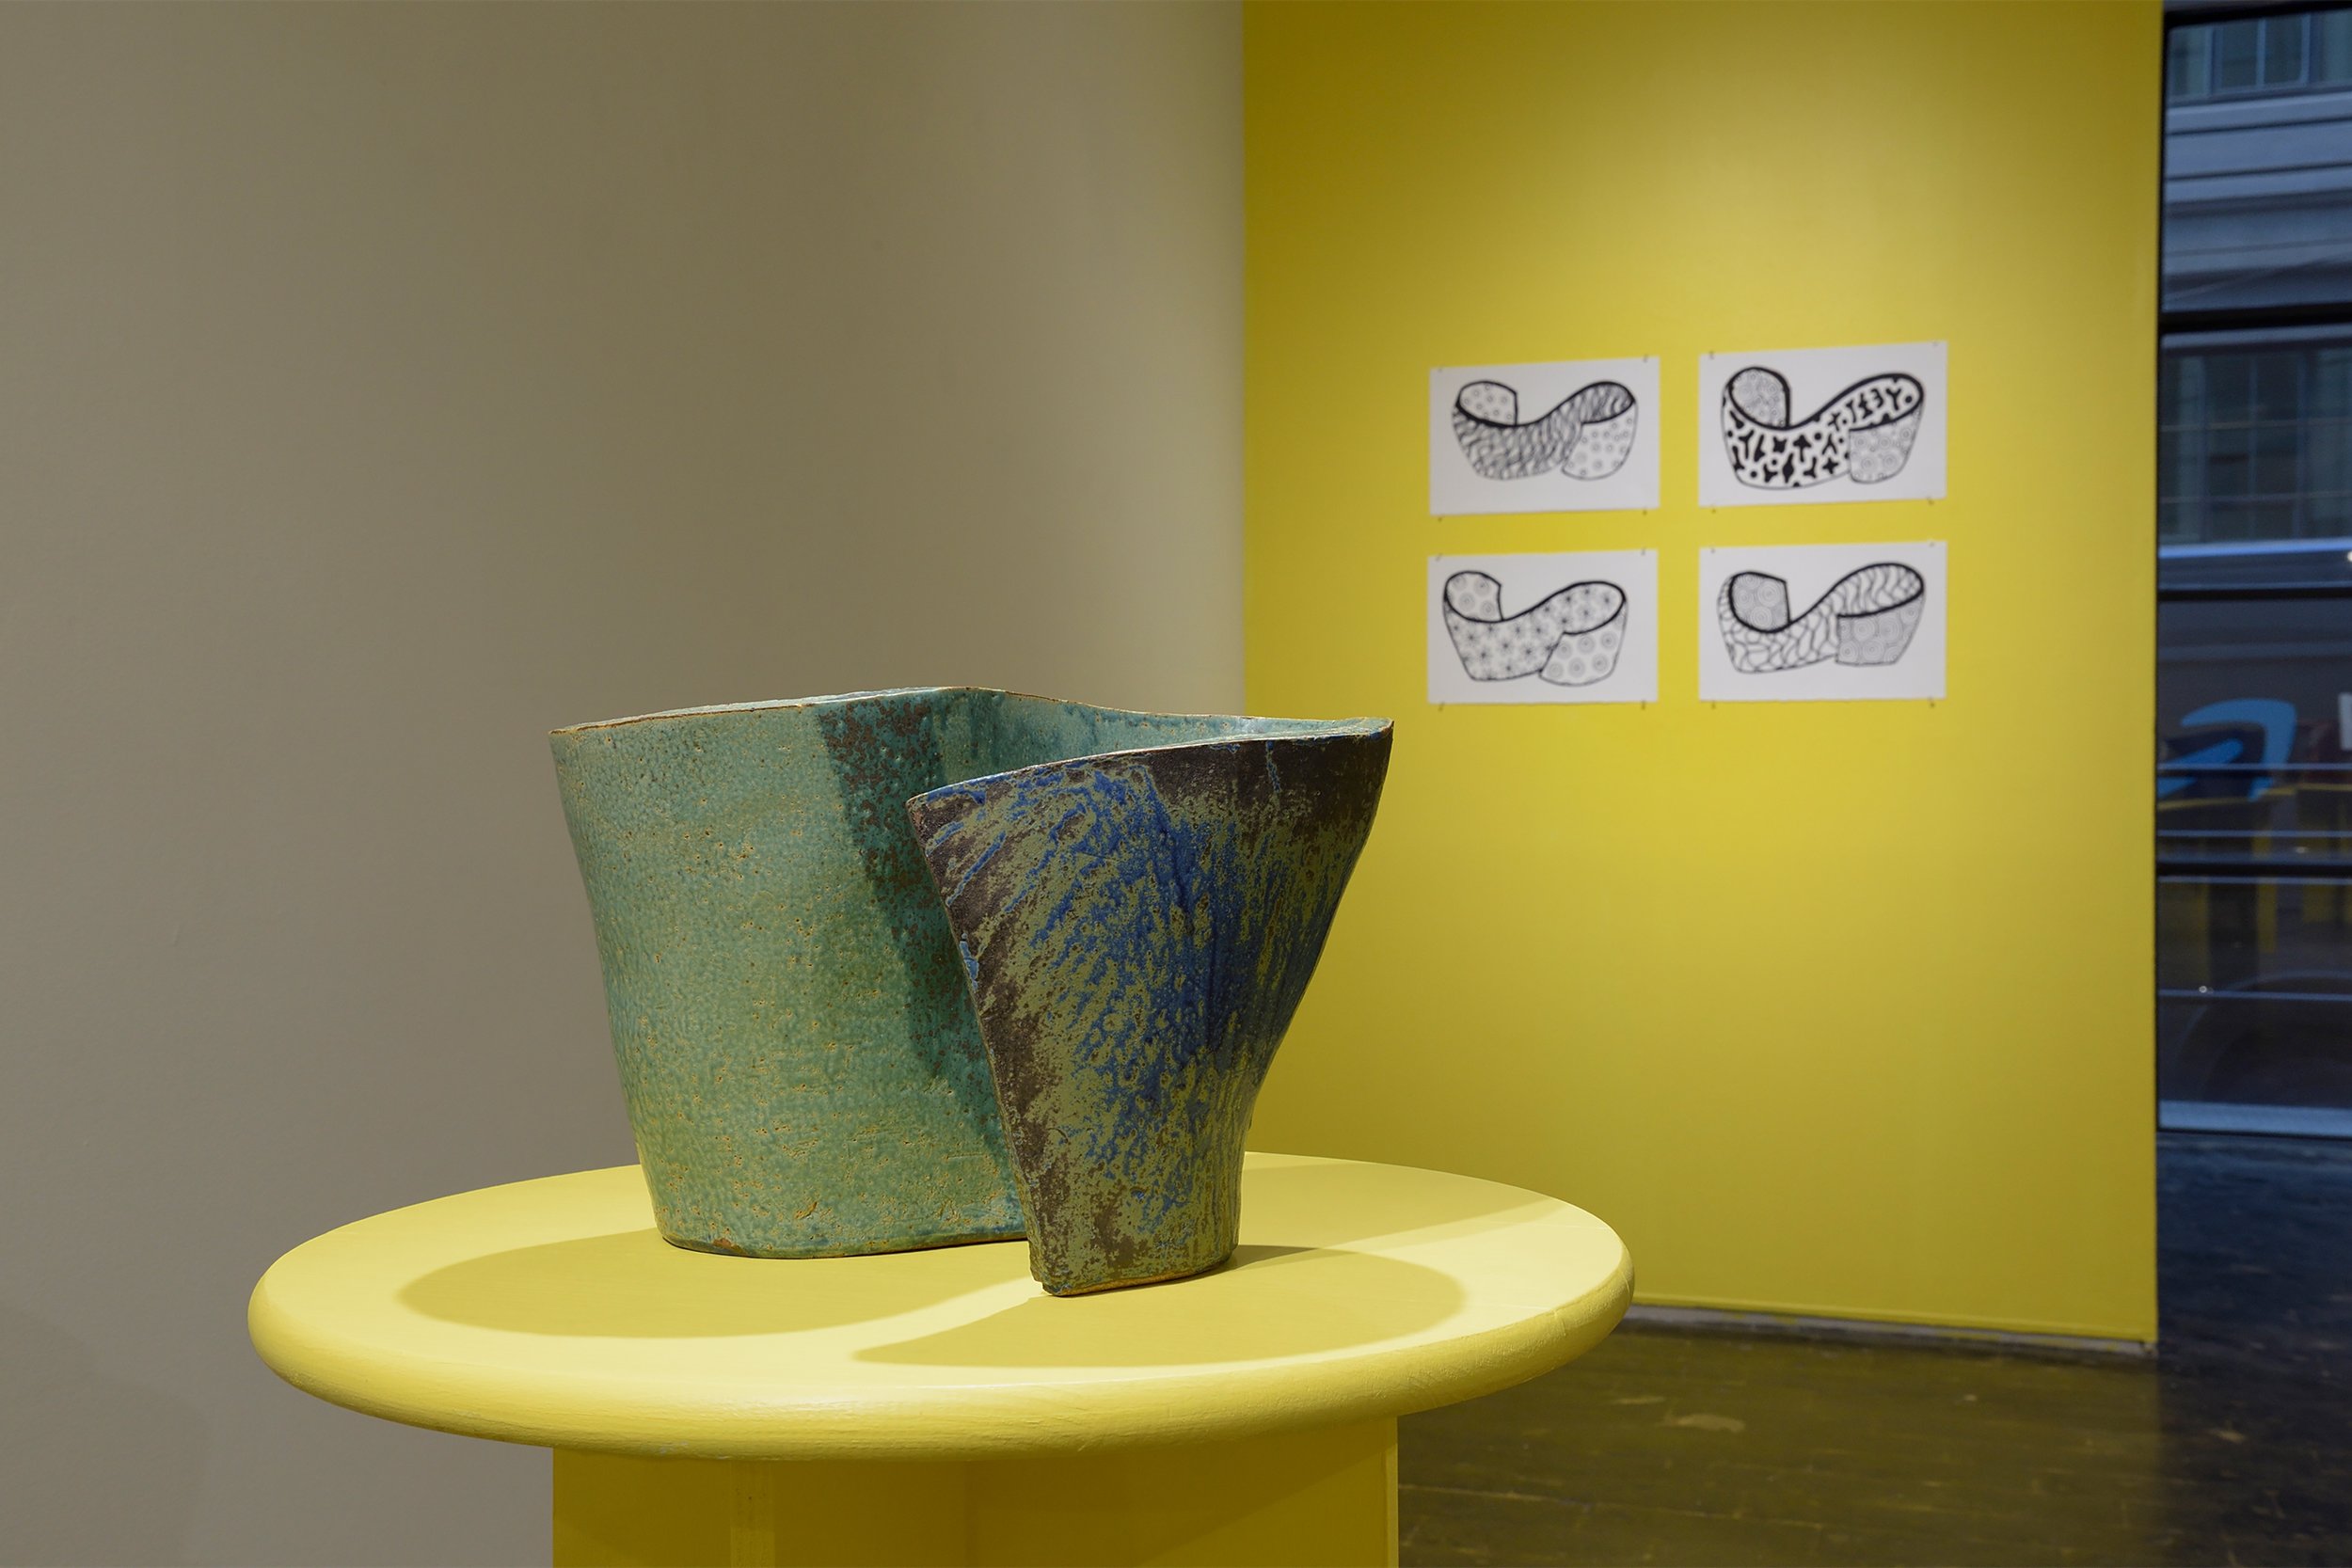  Sylvia Netzer, ceramic artist"S...asinSylvia" Exhibition @ AIR Gallery 